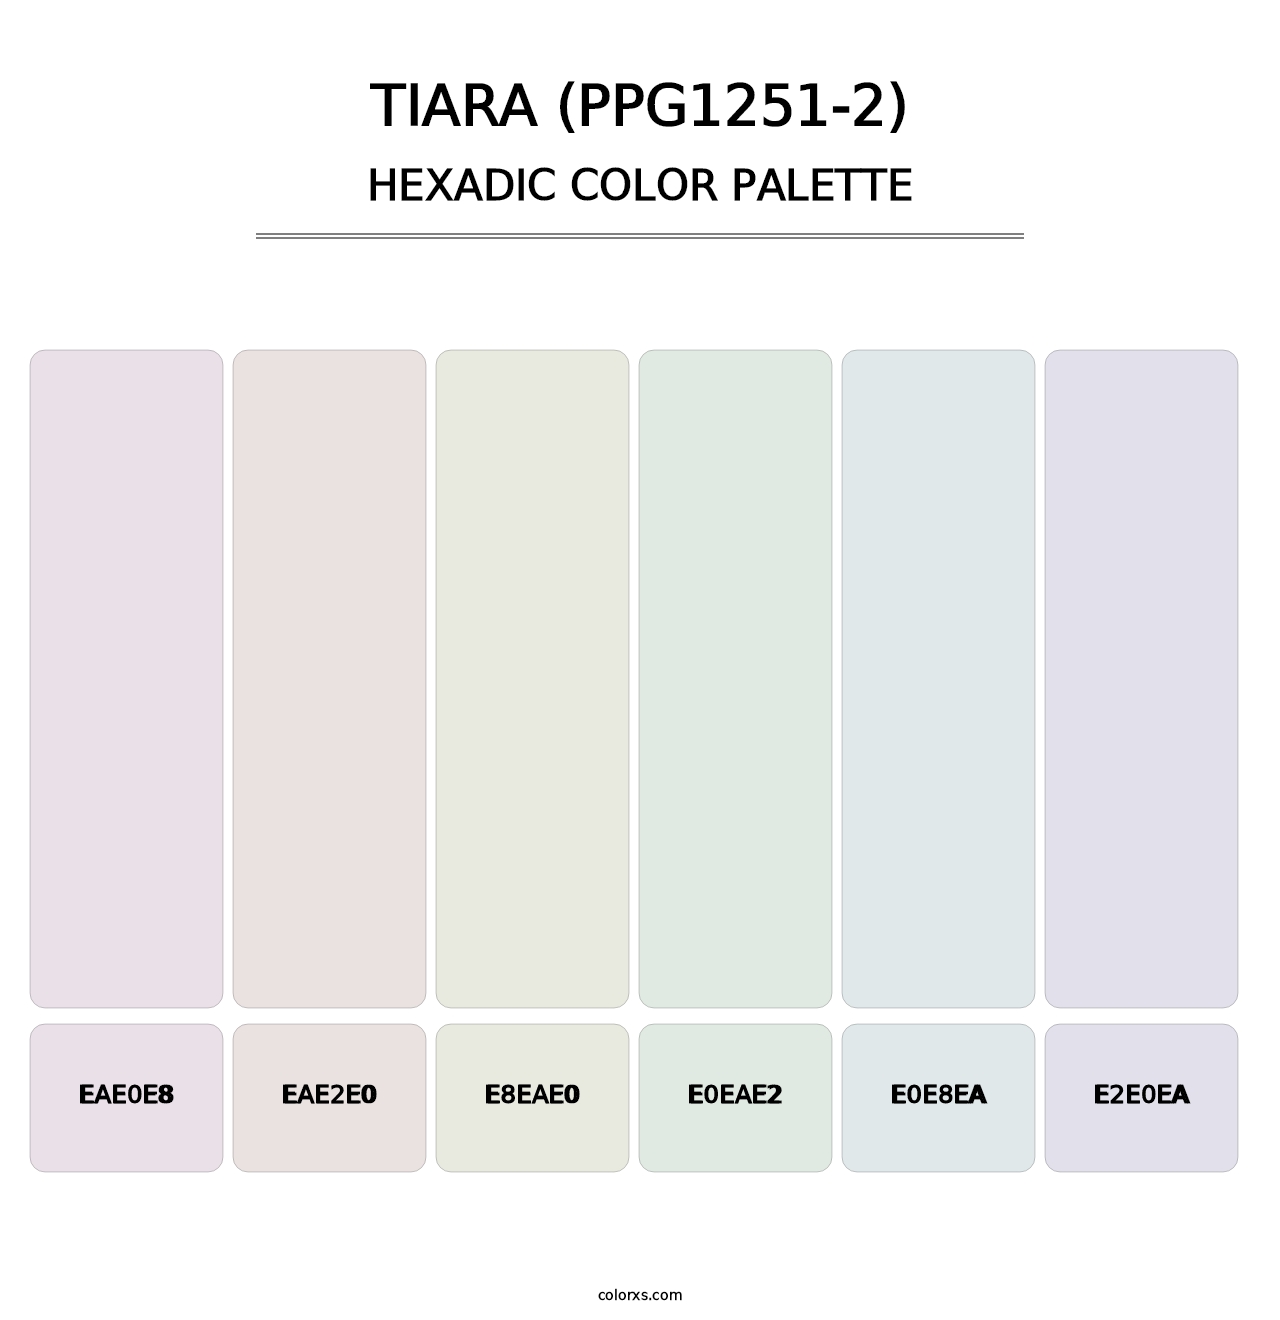 Tiara (PPG1251-2) - Hexadic Color Palette